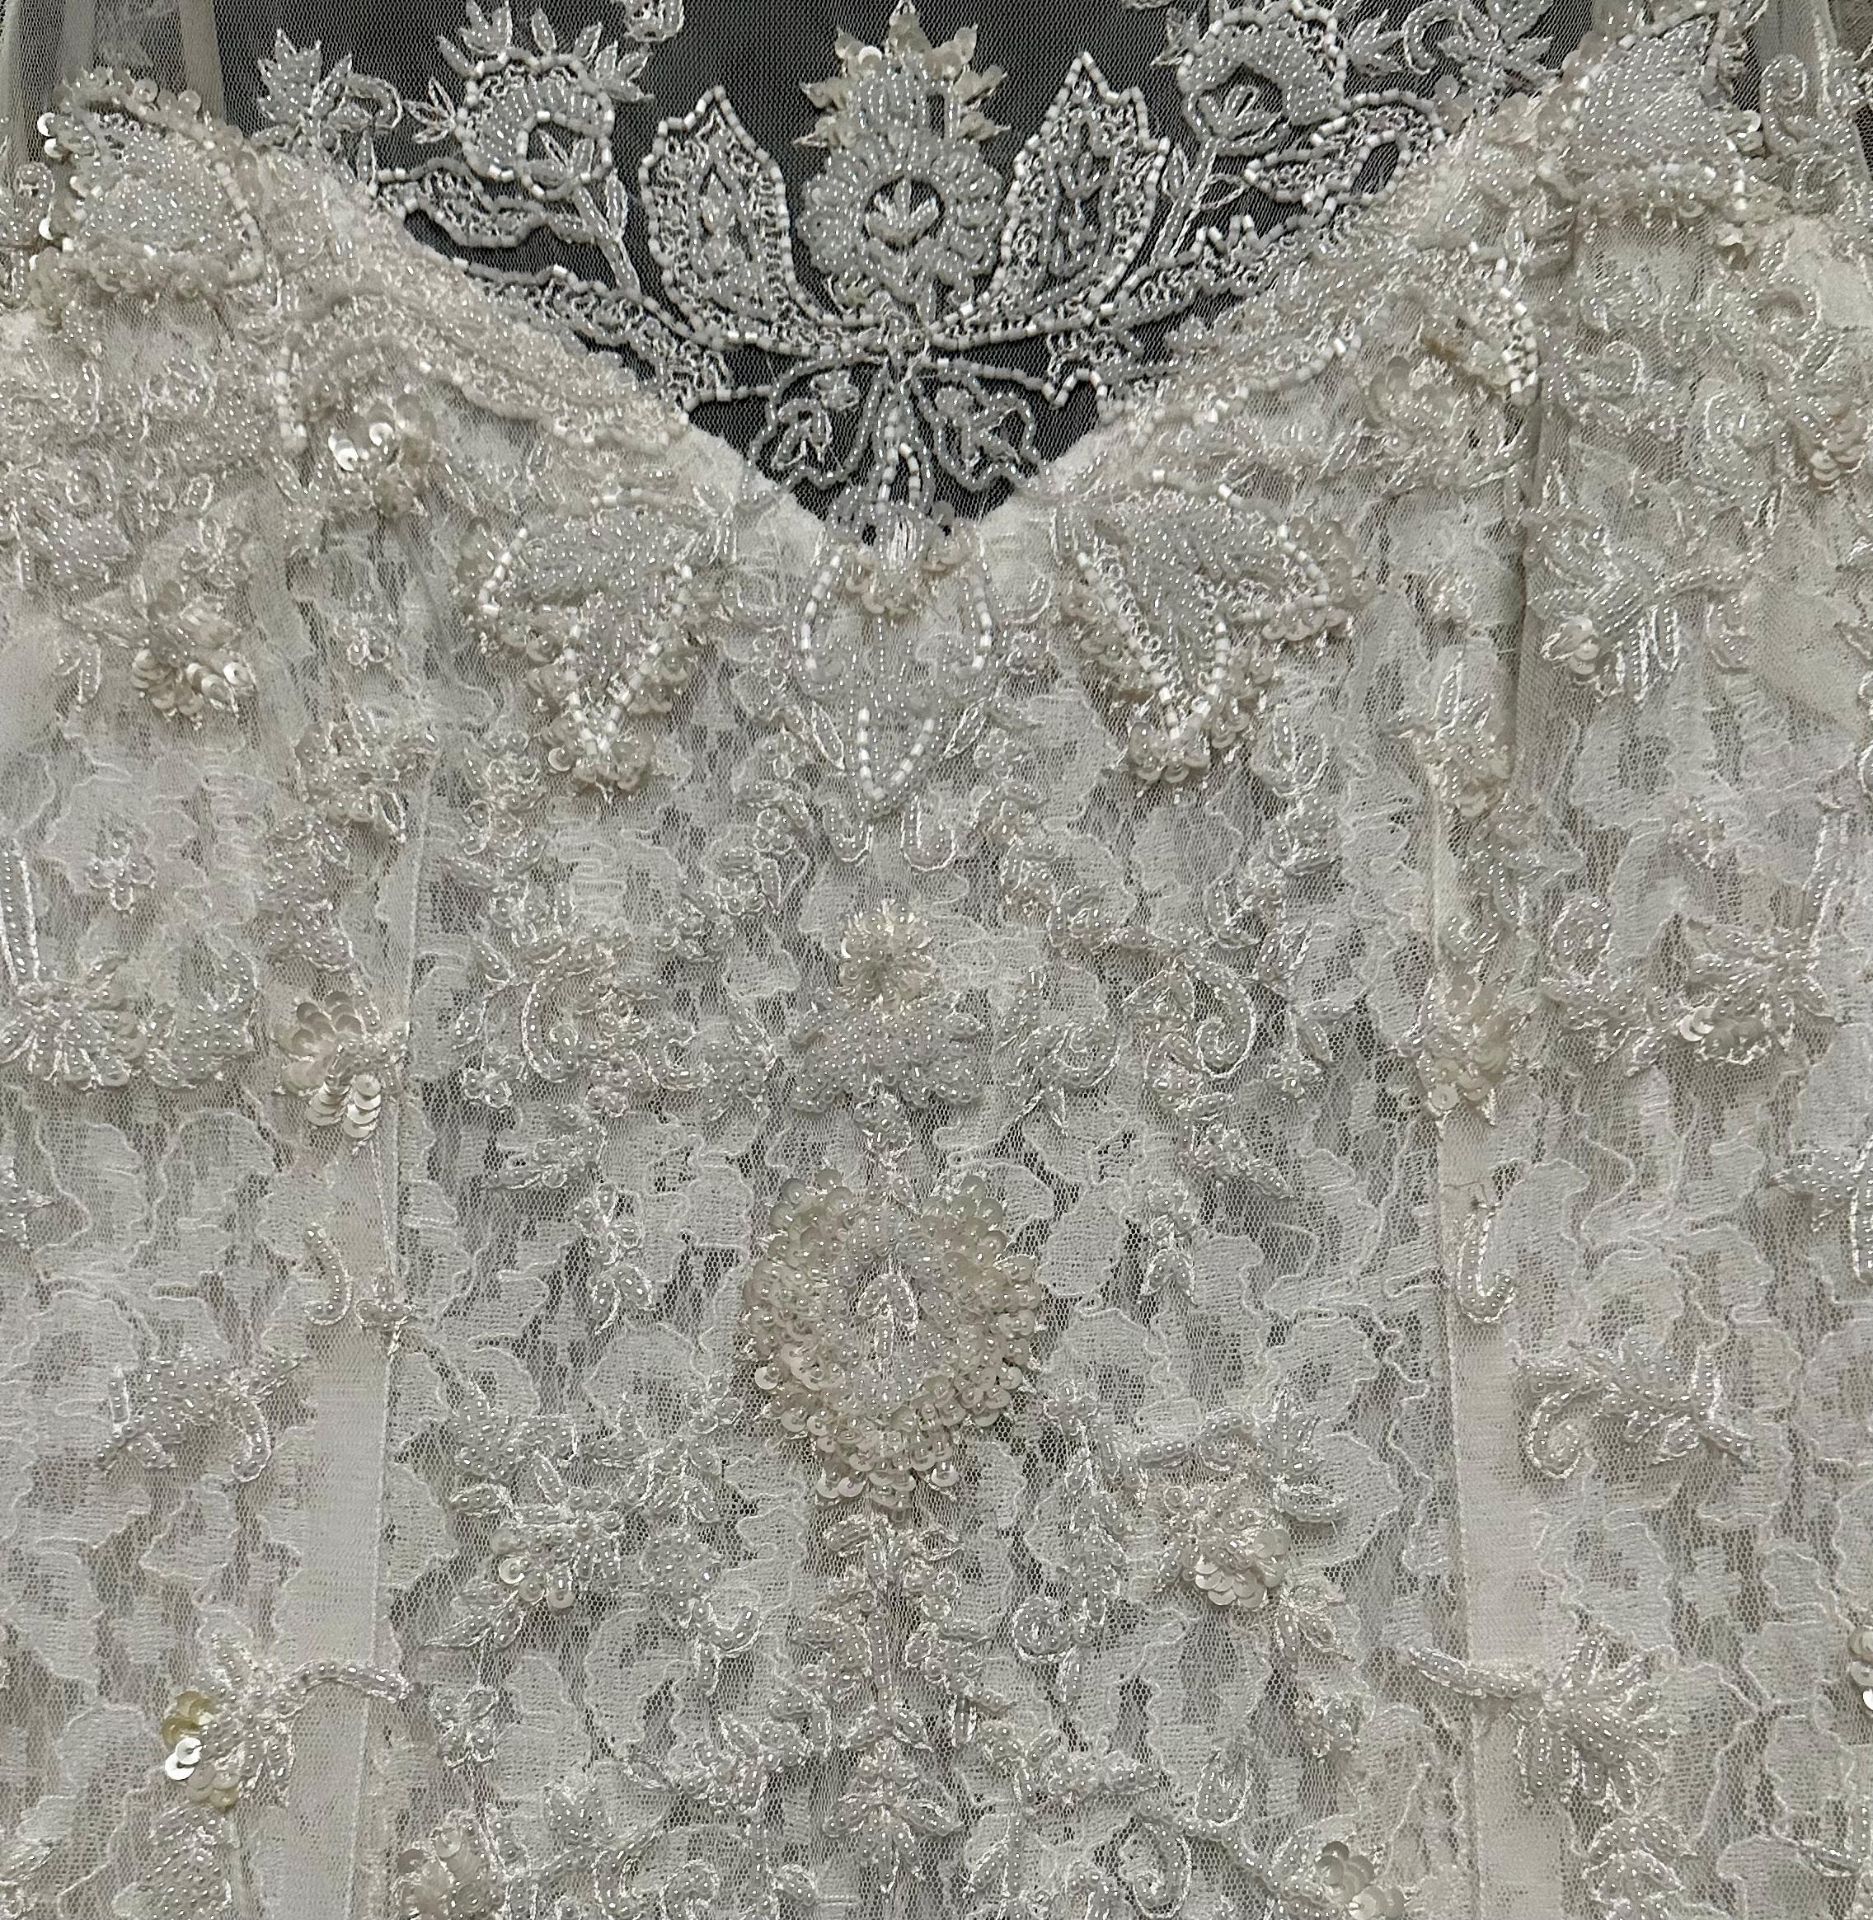 1 x ELIZA JANE HOWELL 'Violetta' Chiffon & Beaded Designer Wedding Dress Bridal Gown RRP £2,535 UK10 - Image 4 of 6